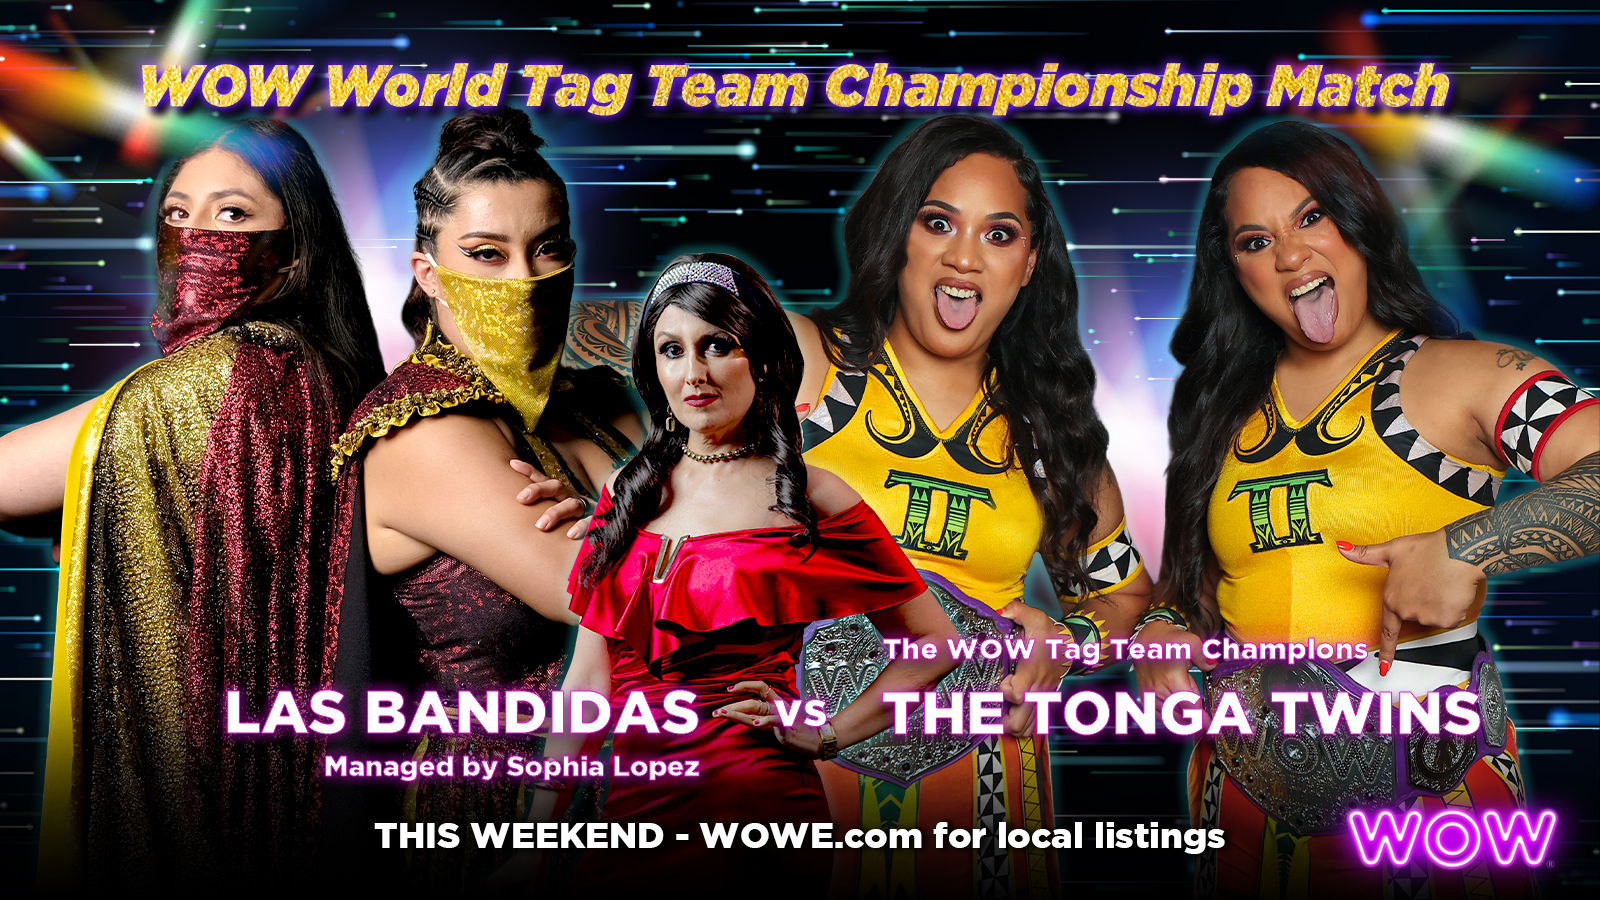 Season 2 Episode 2: WOW World Tag Team Championship Match - Las Bandidas, managed by Sophia Lopez, vs The WOW Tag Team Champions, The Tonga Twins